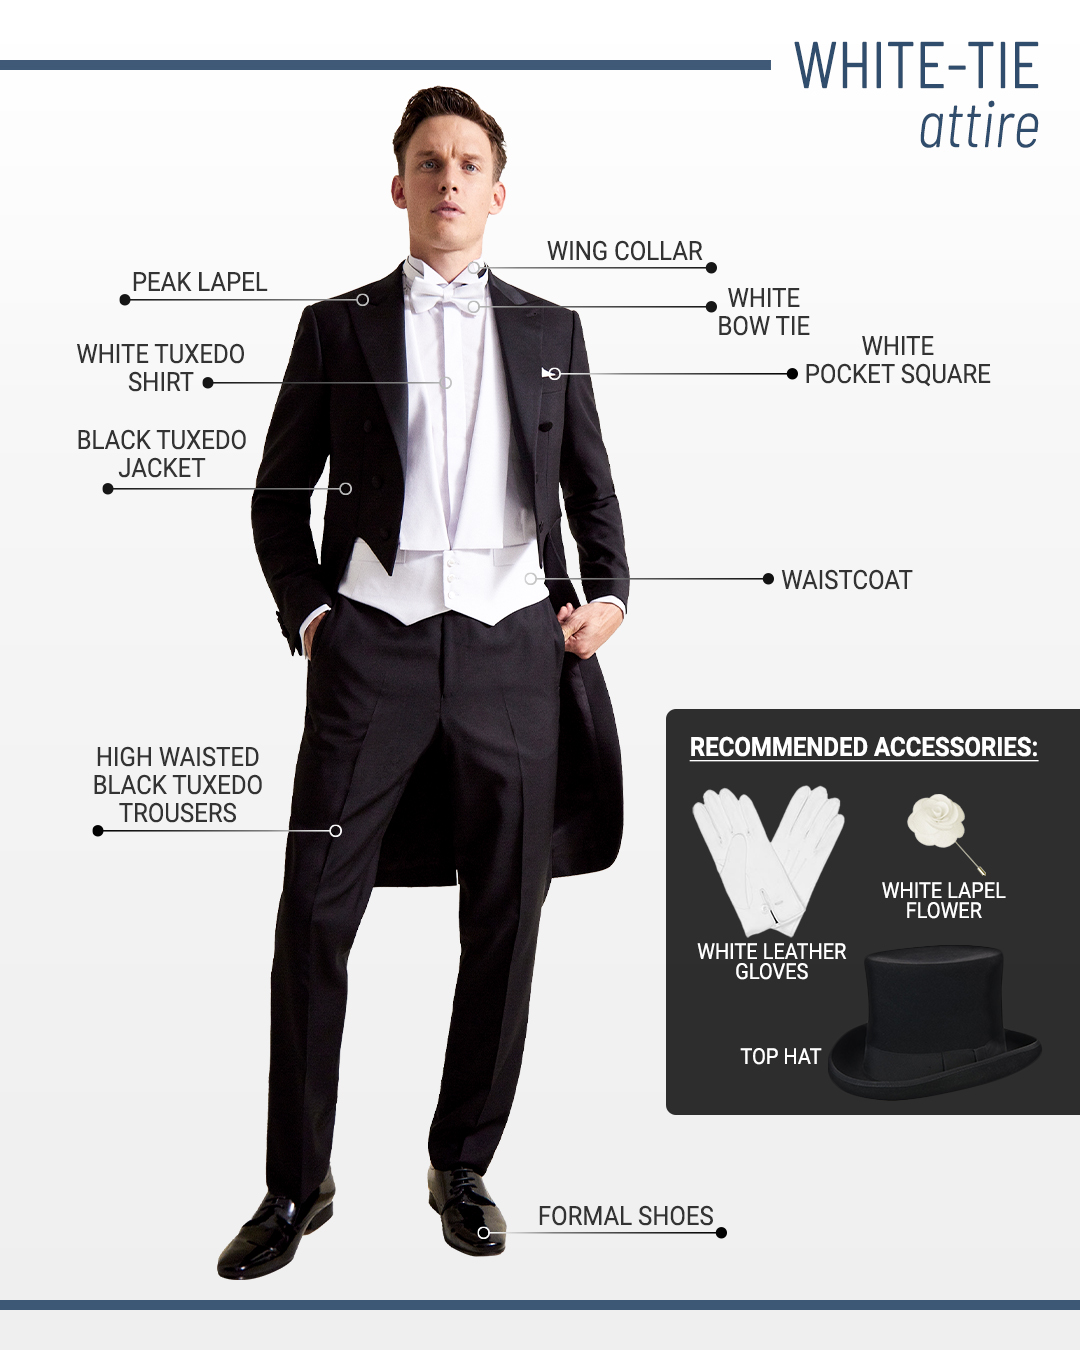 White-tie dress code and attire for men